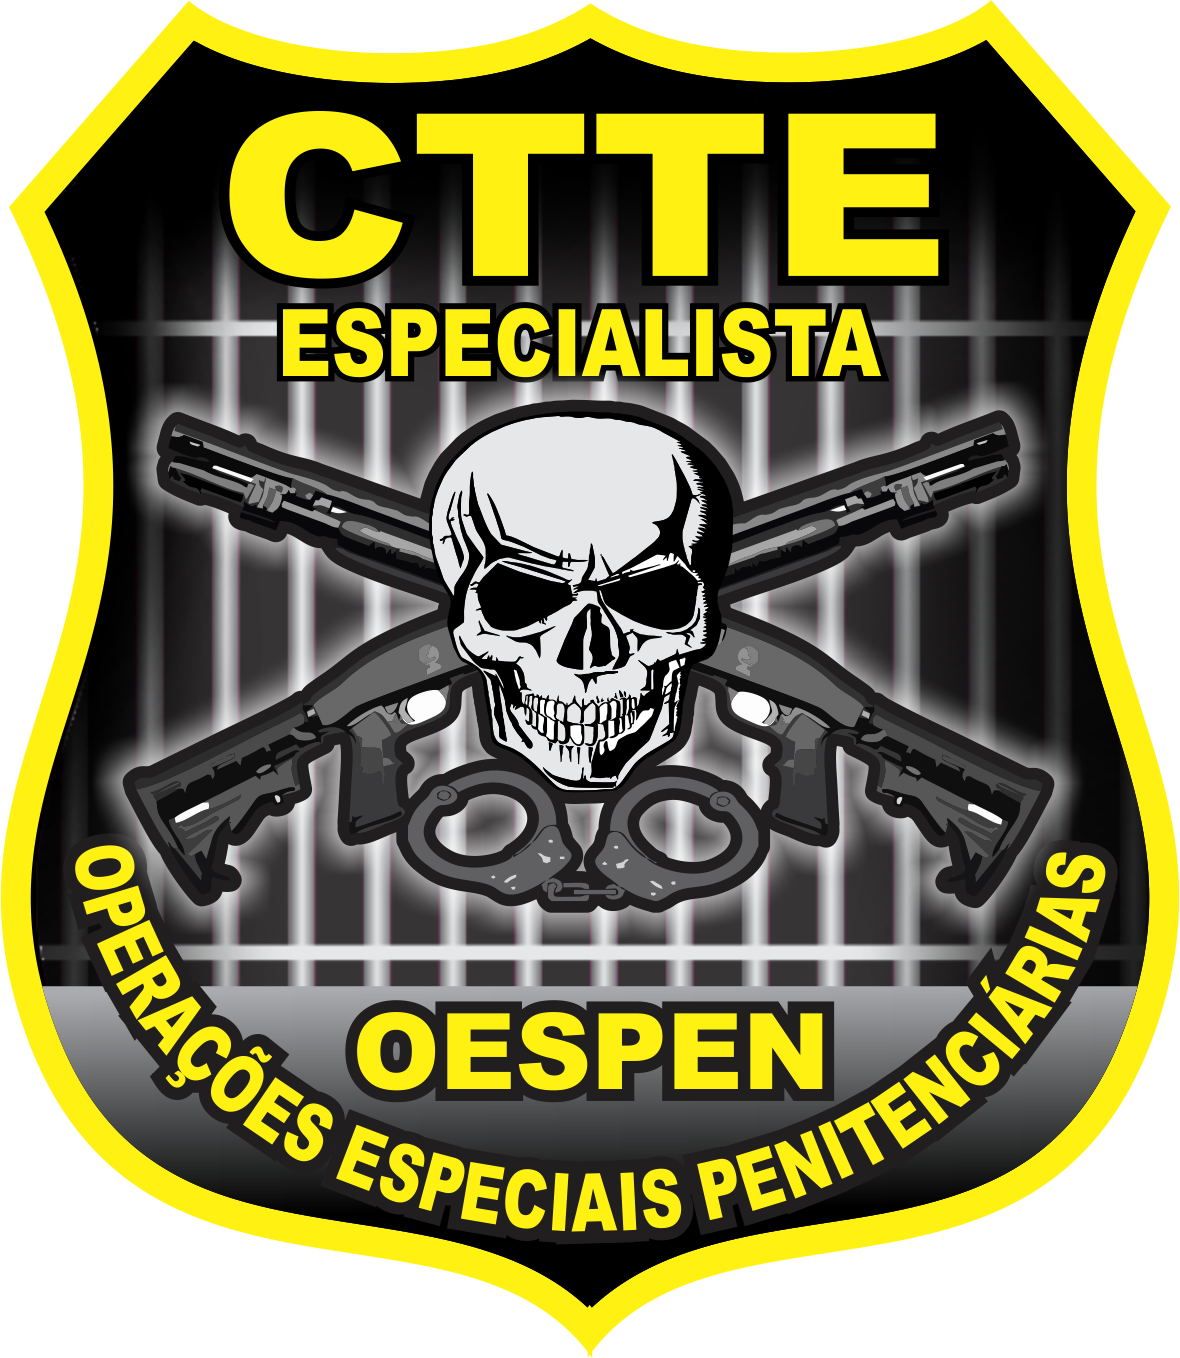 logo CTTE Caveira